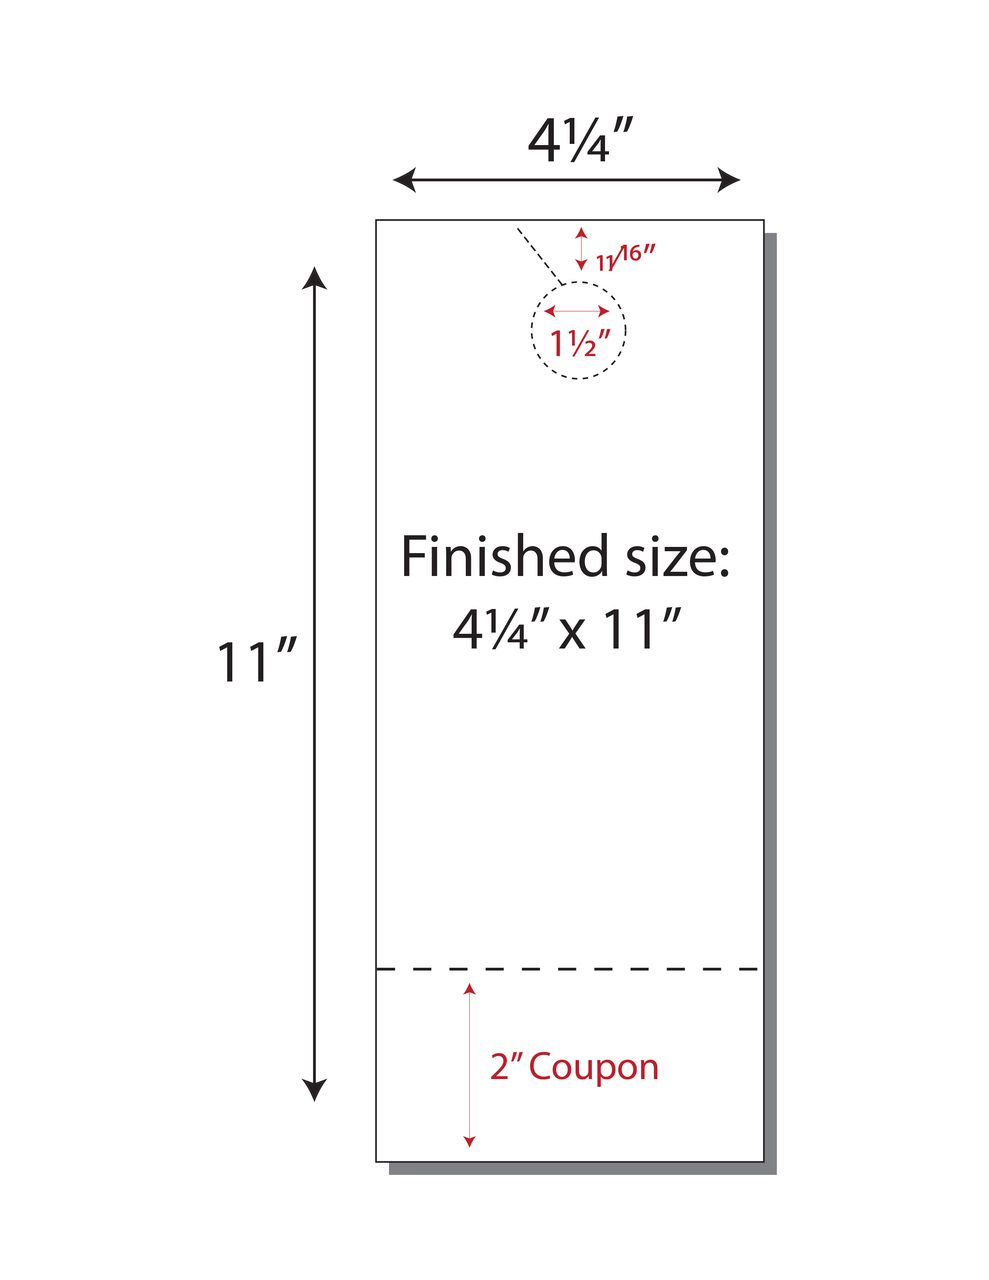 Item 211: 2-Up 4 1/4" x 11" Door Hanger with 2" Coupon 8 1/2" x 11" Sheet